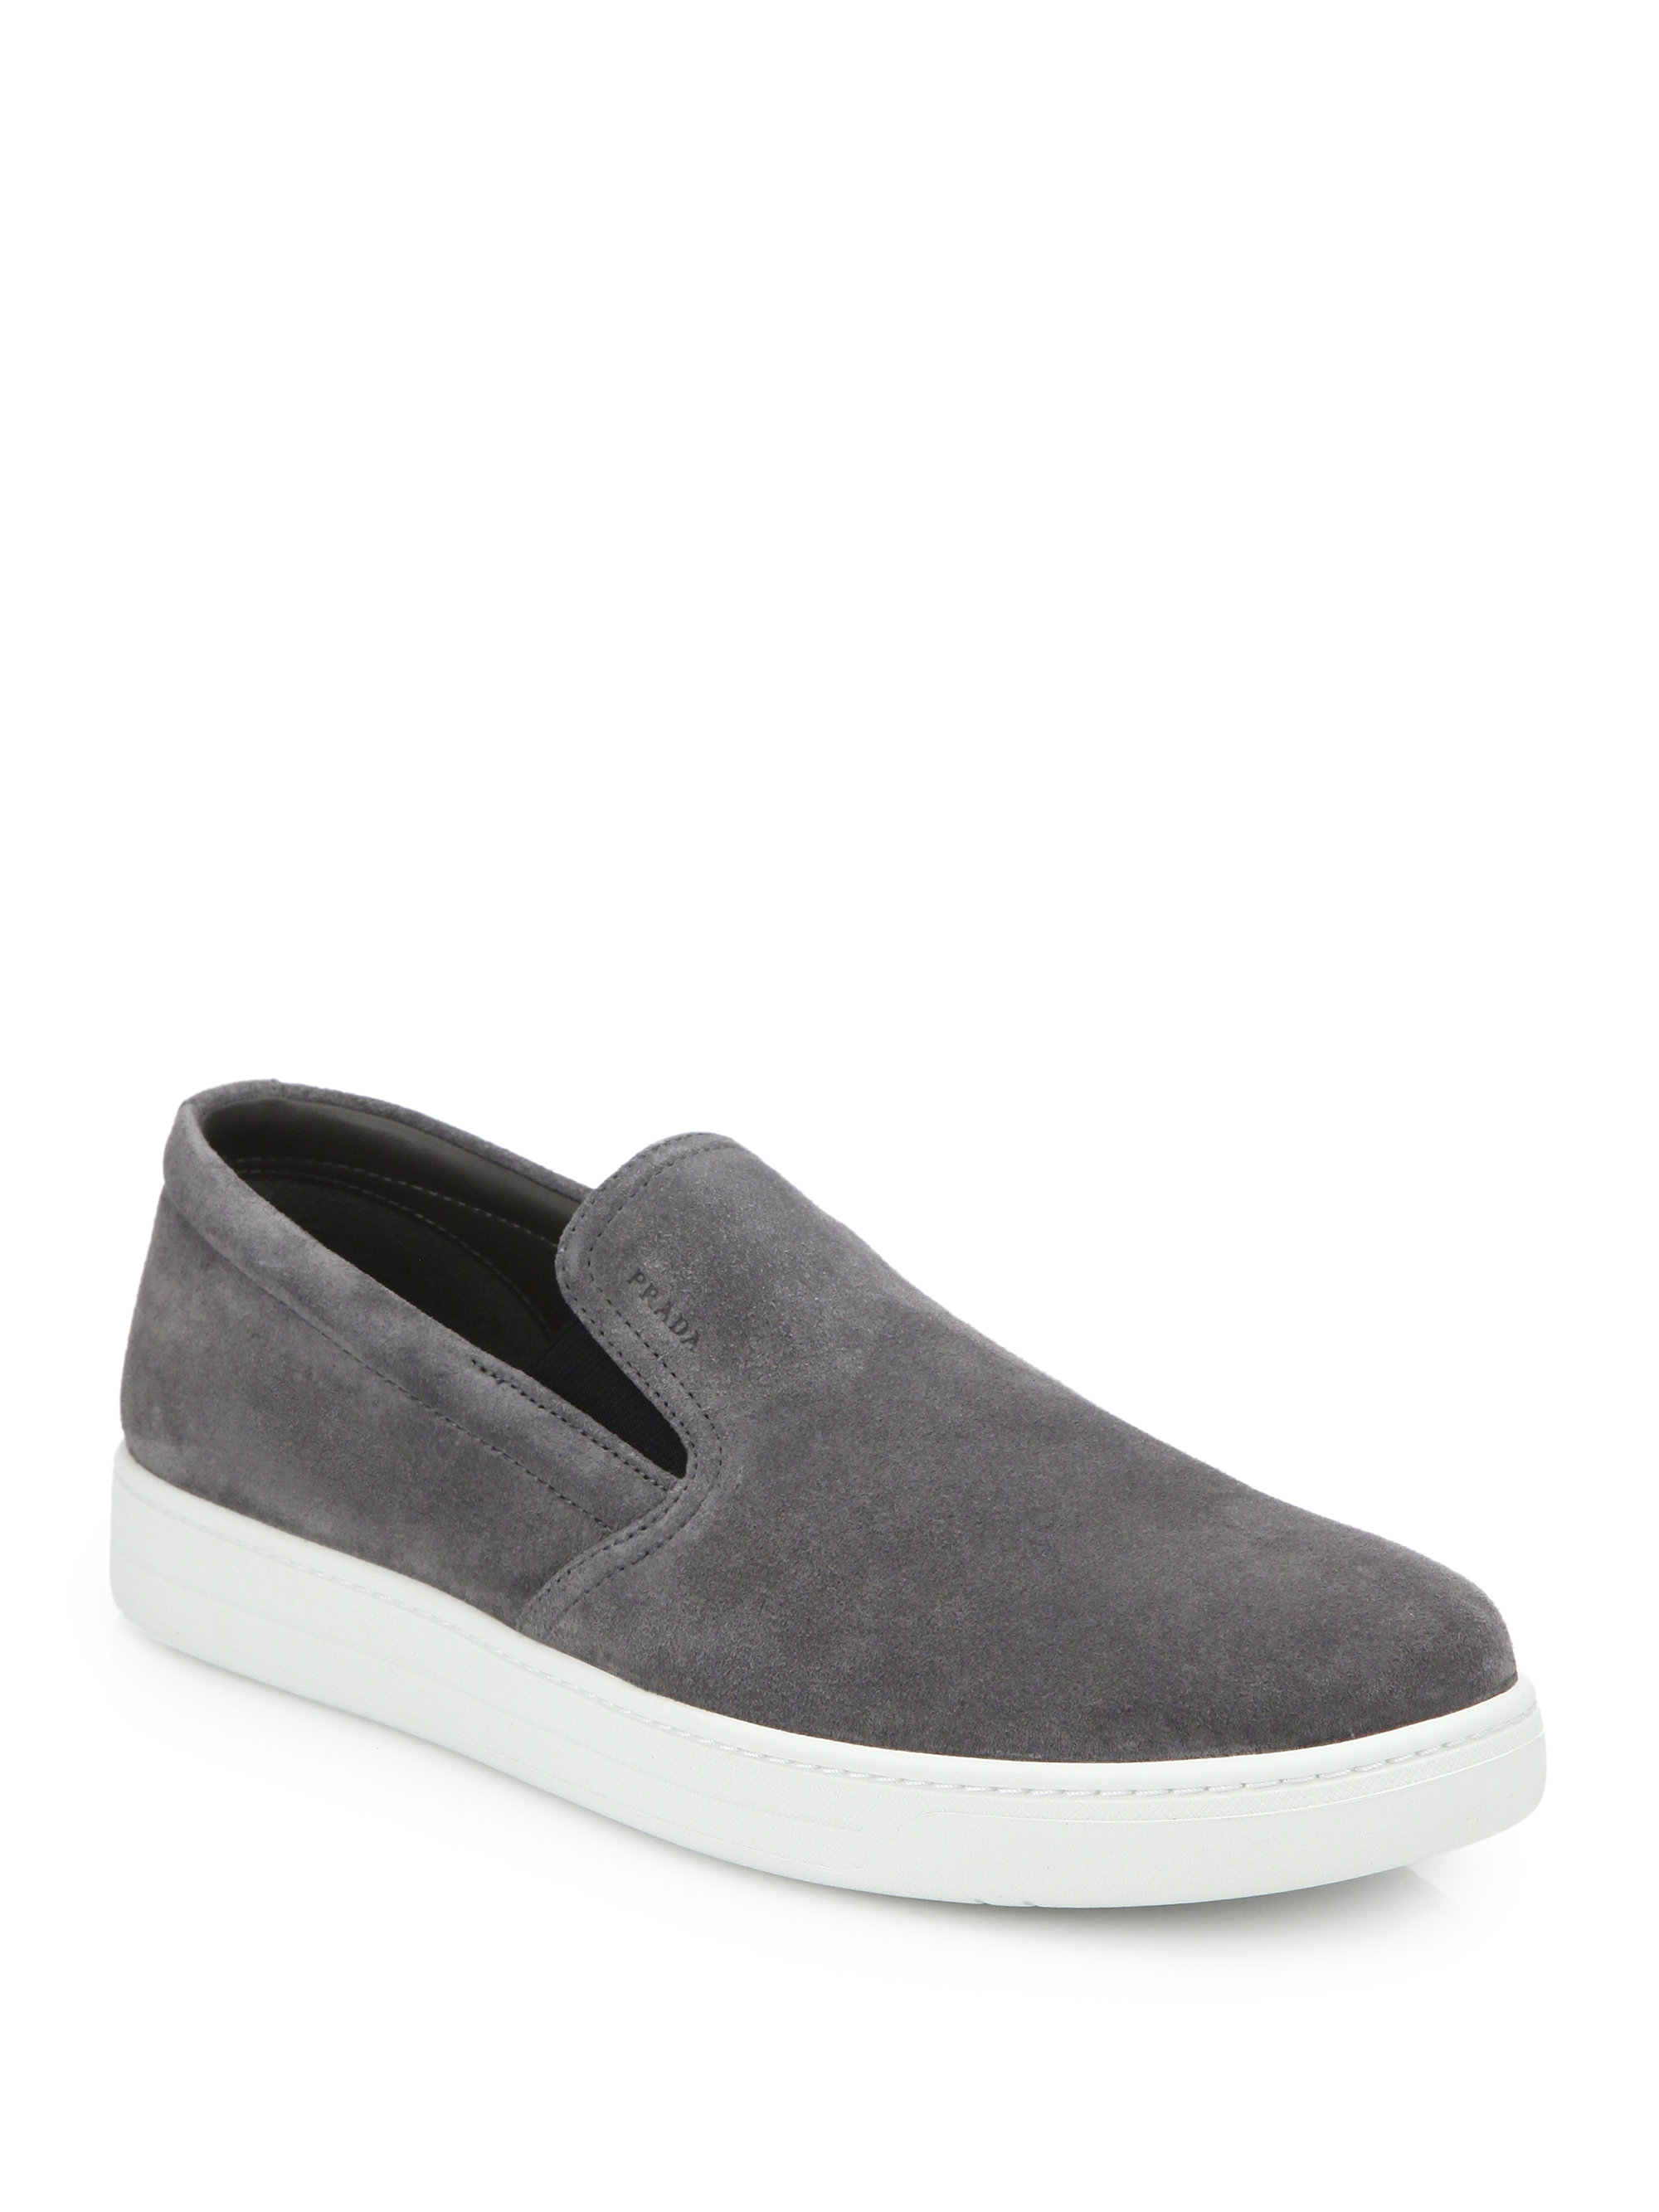 Prada Suede Slip-on Sneakers in Gray for Men (grey) | Lyst